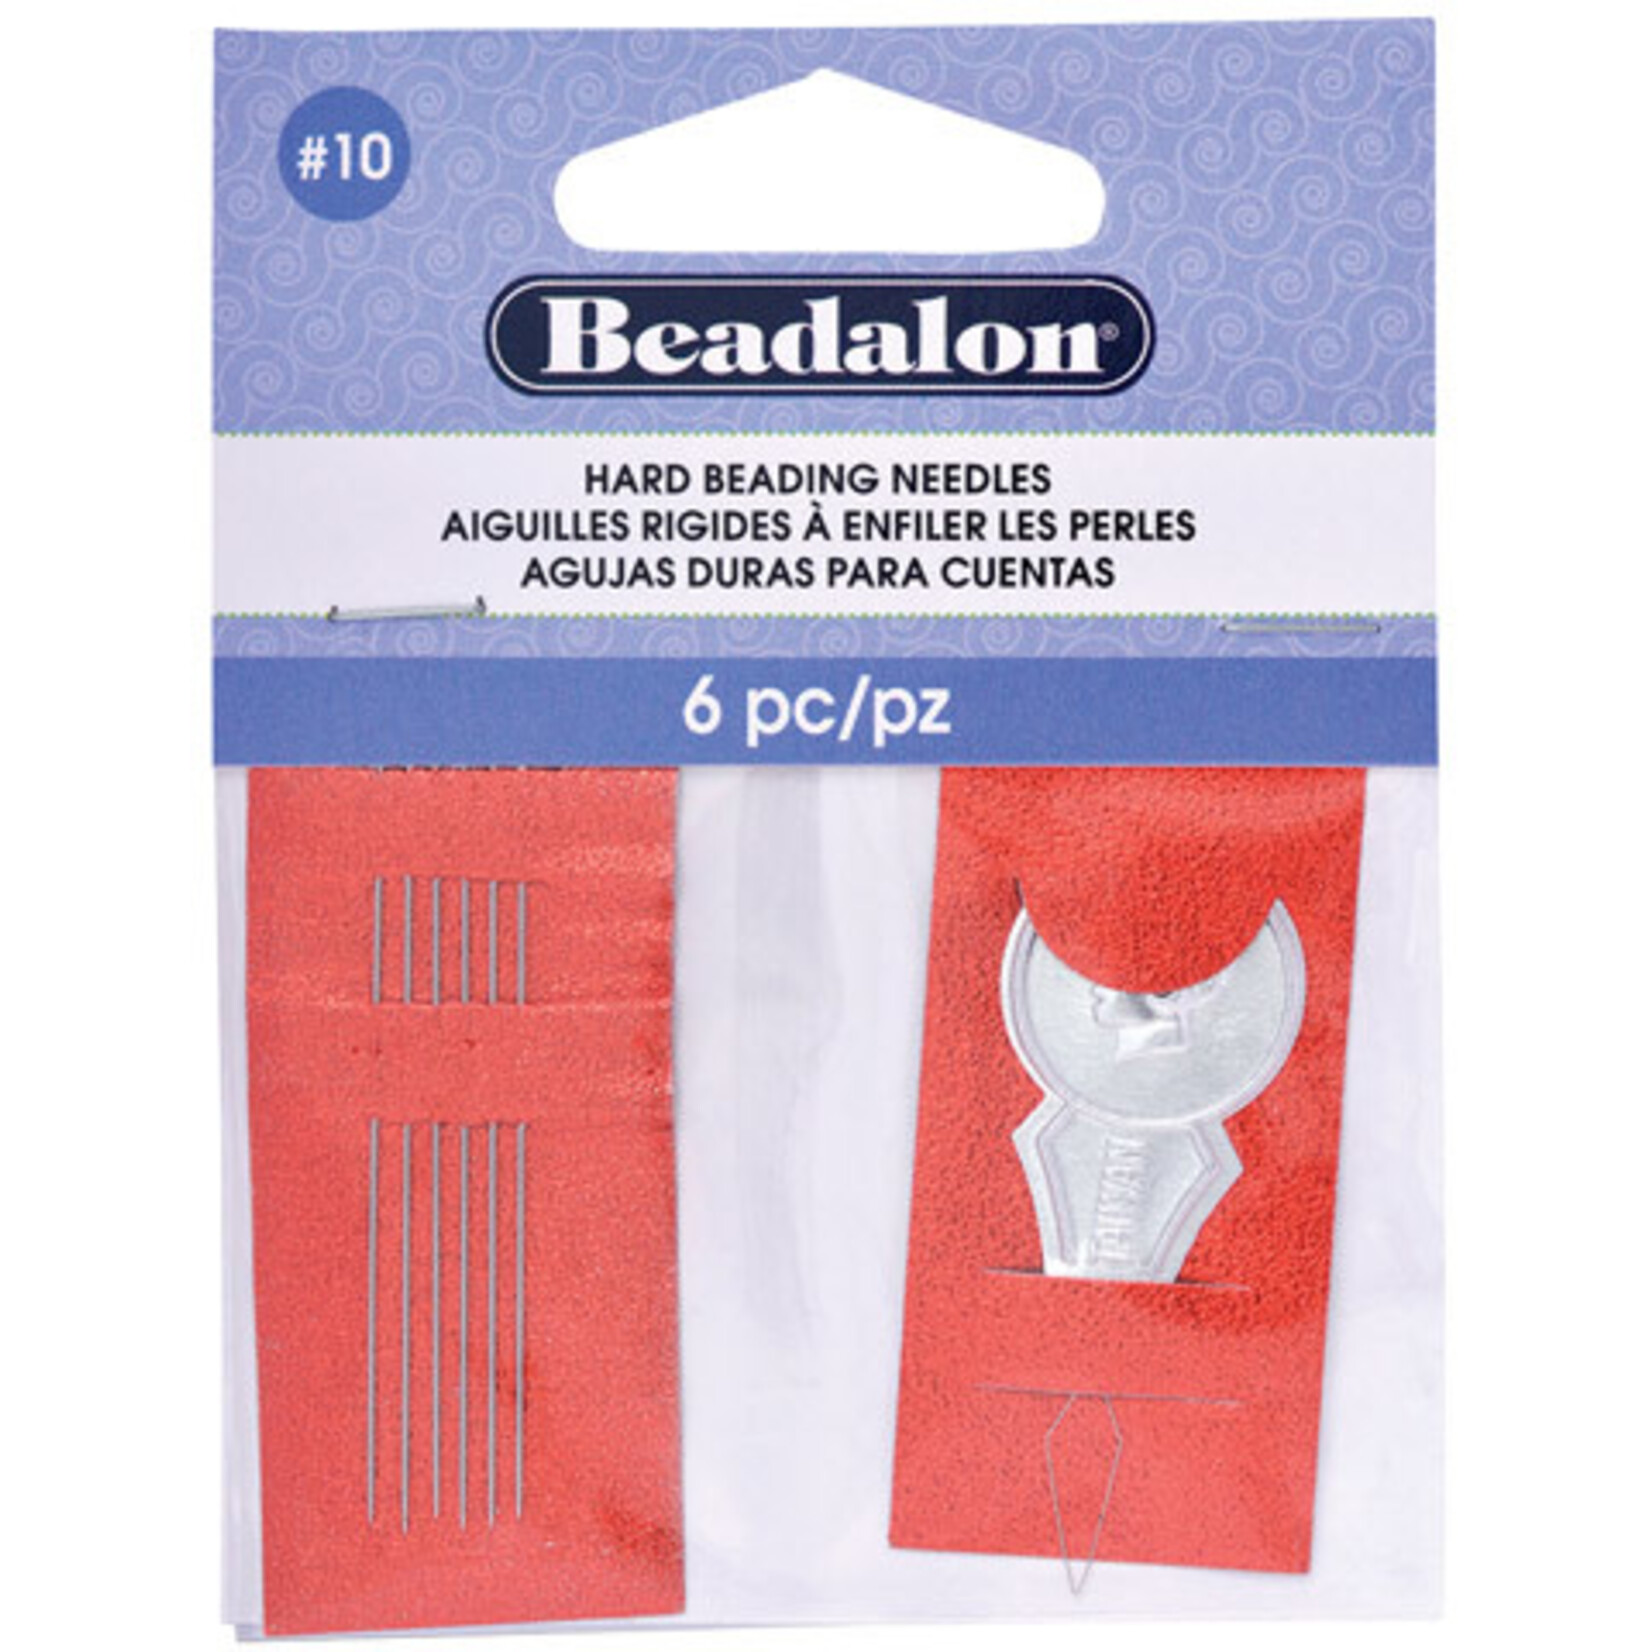 Beadalon Hard Beading Needles 10 6pc